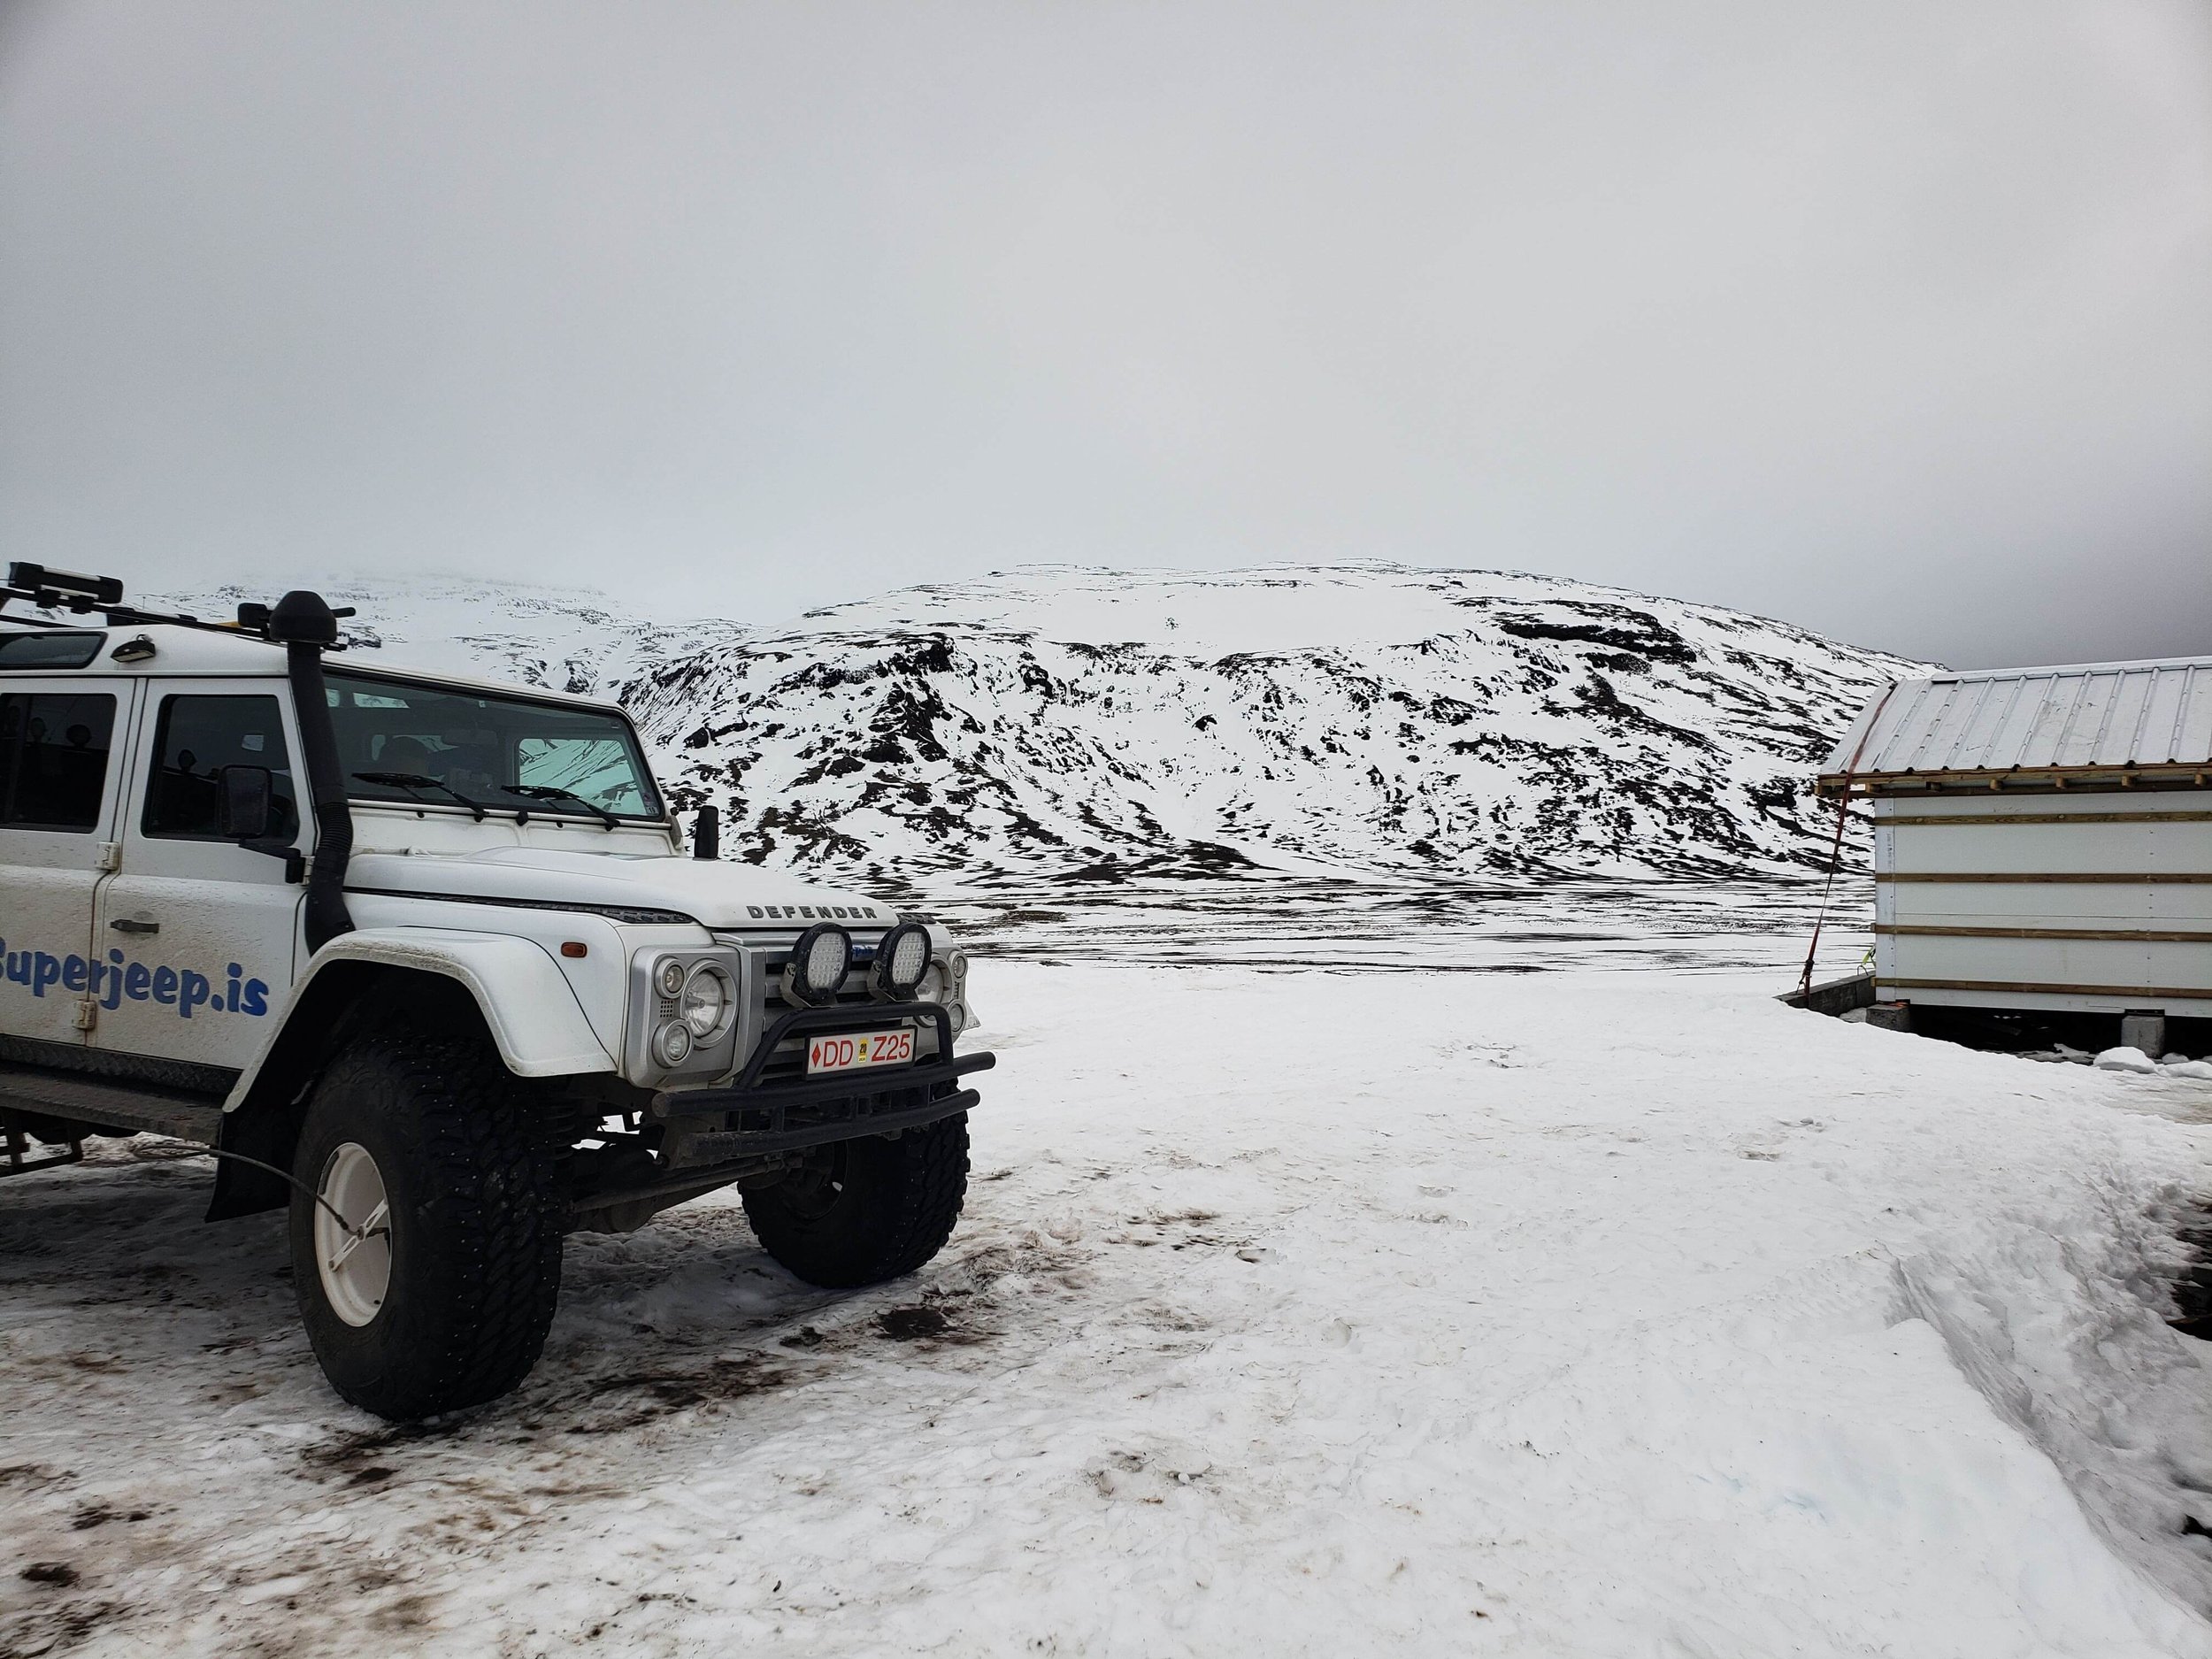 Super Jeep Iceland